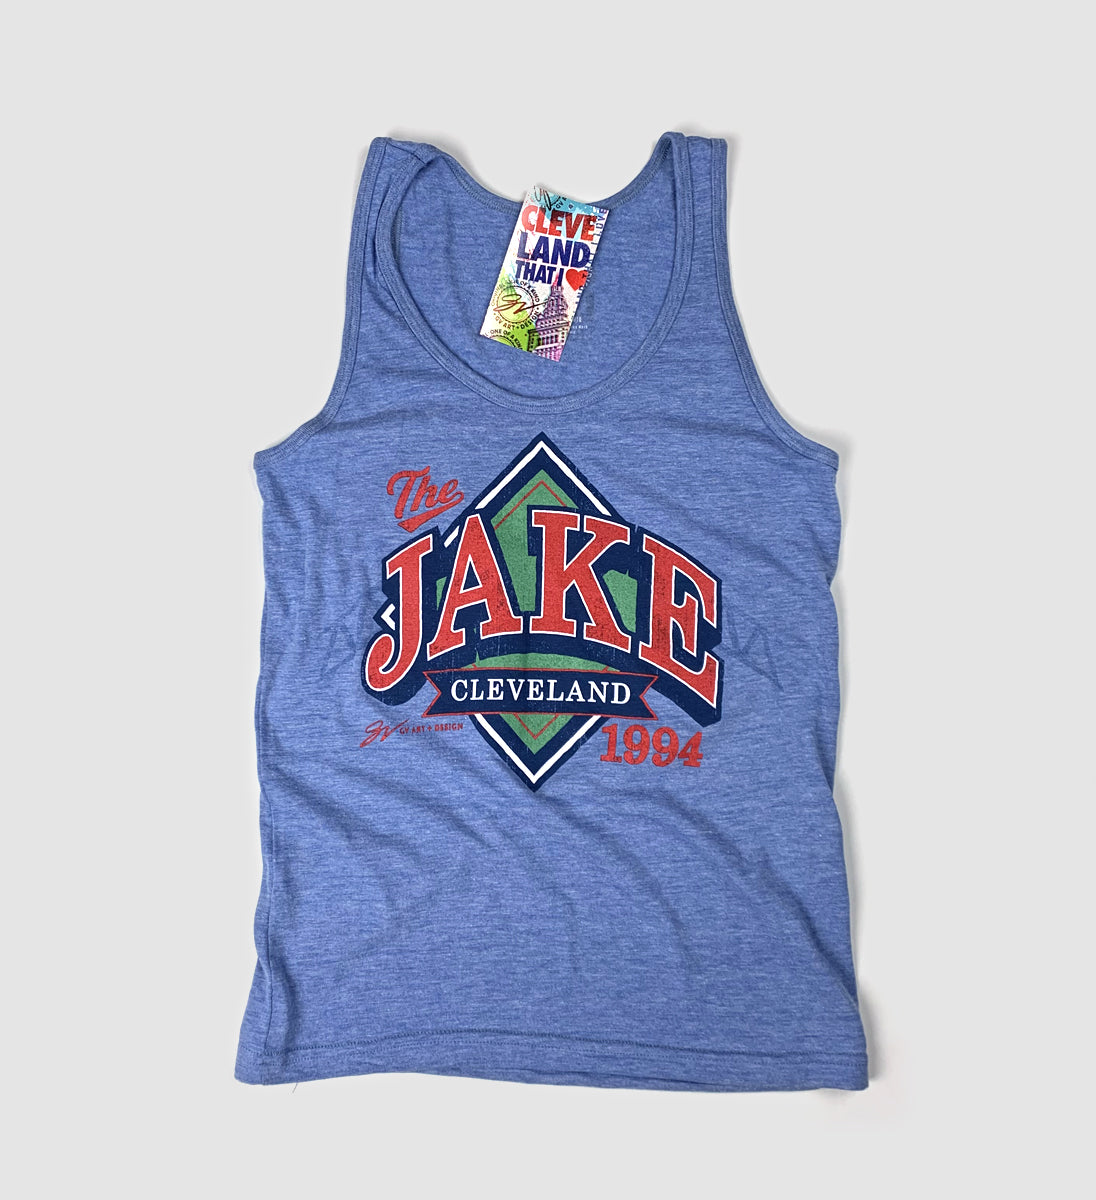 "The Jake" 94 Vintage Blue Tank Top